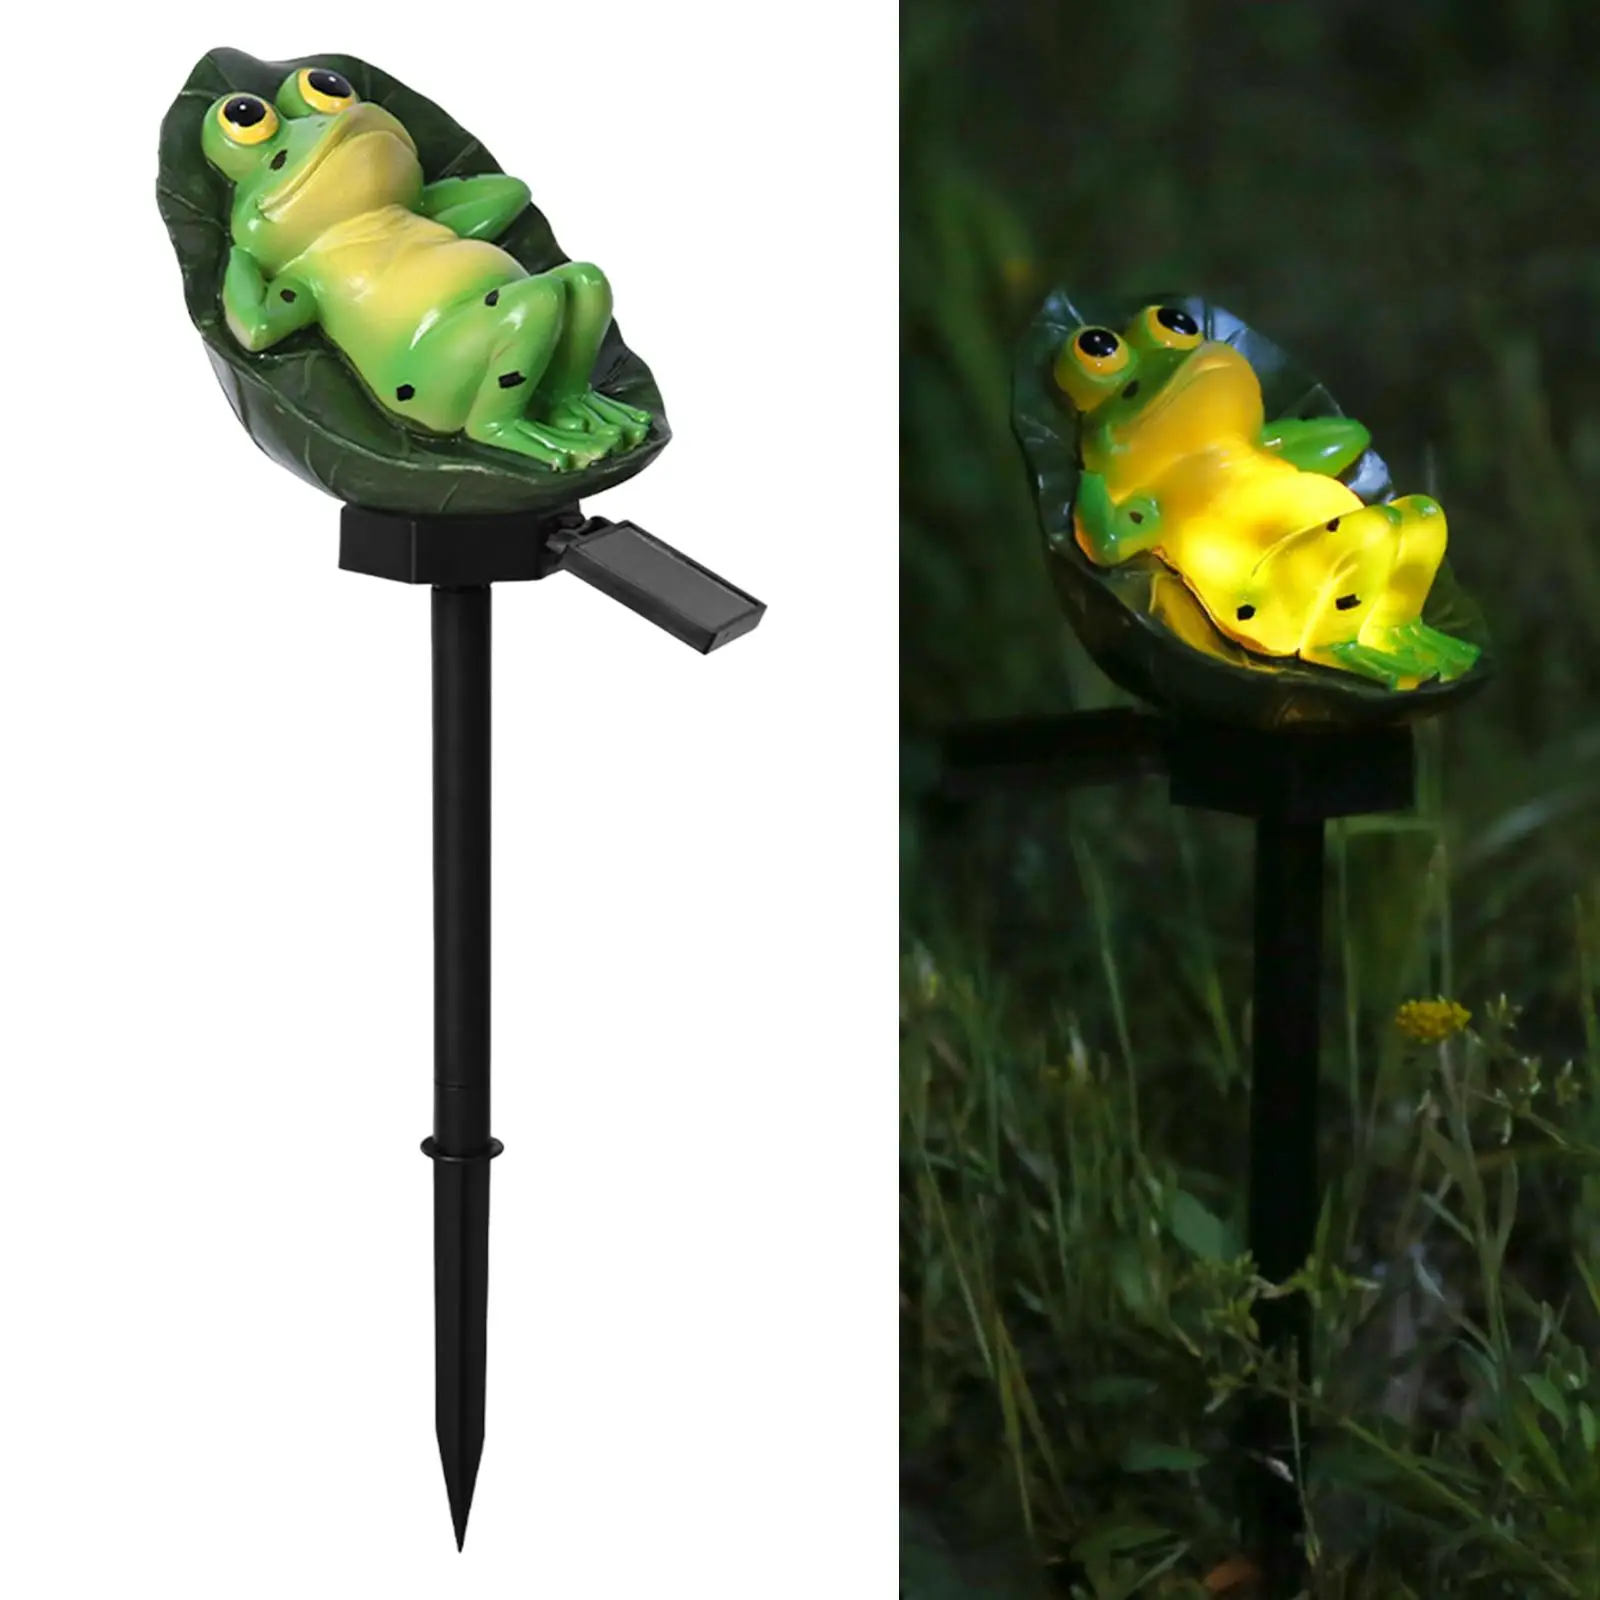 Cute Solar Fairy Garden Light Frog Figurine Lamp Landscaping Decorative Ornaments for Path Walkway Patio Flowerbed Corridor